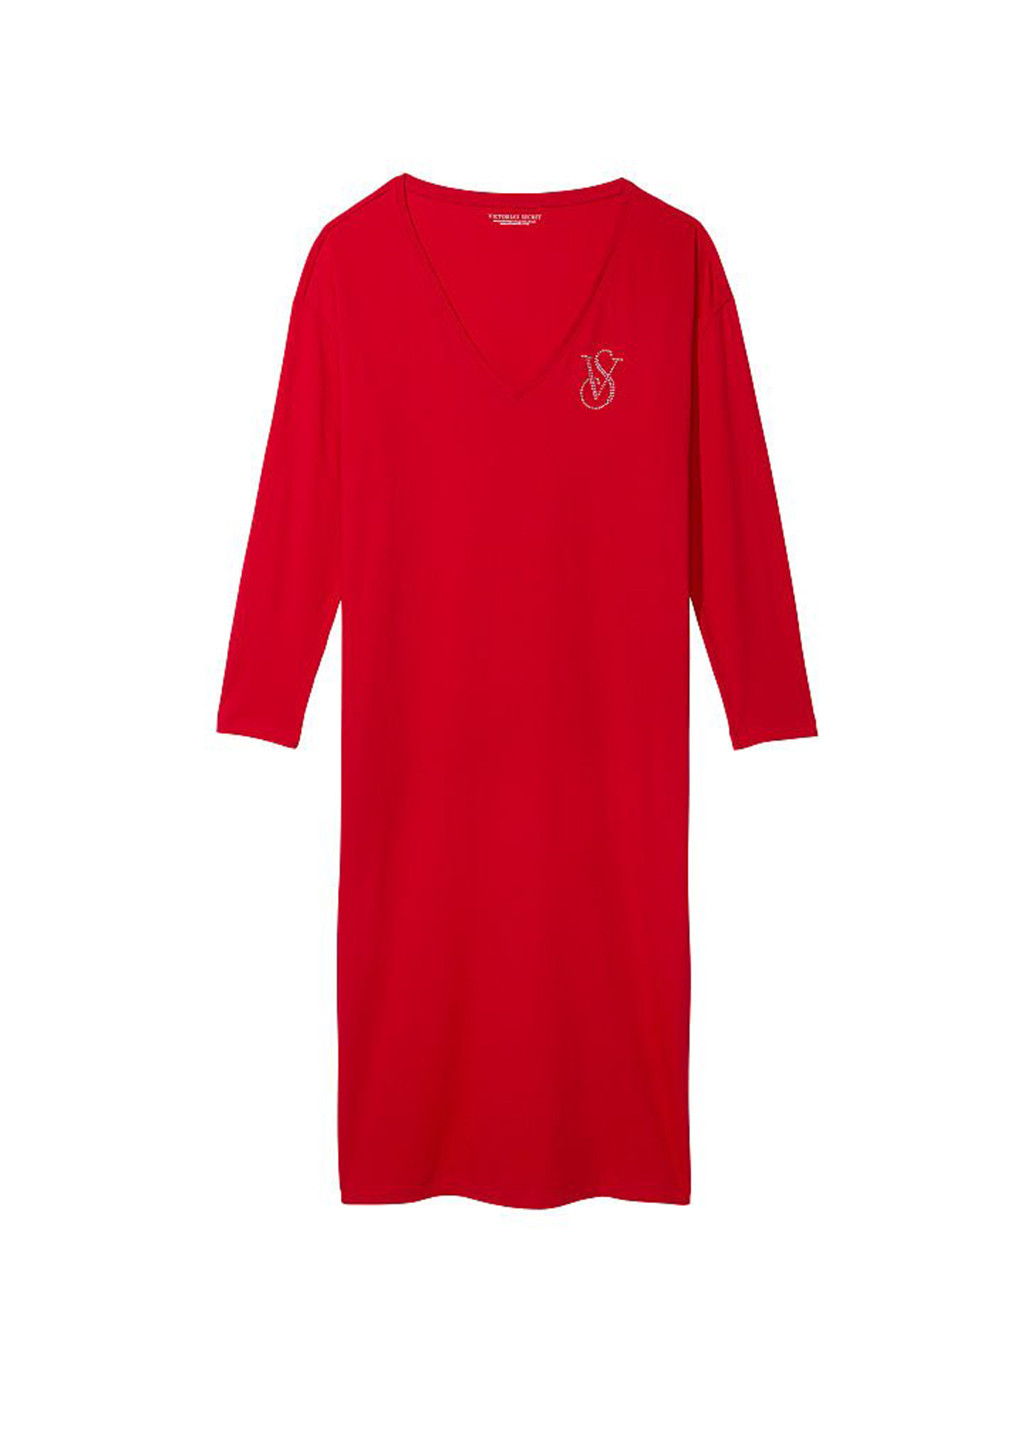 Красное домашнее платье Victoria's Secret с логотипом